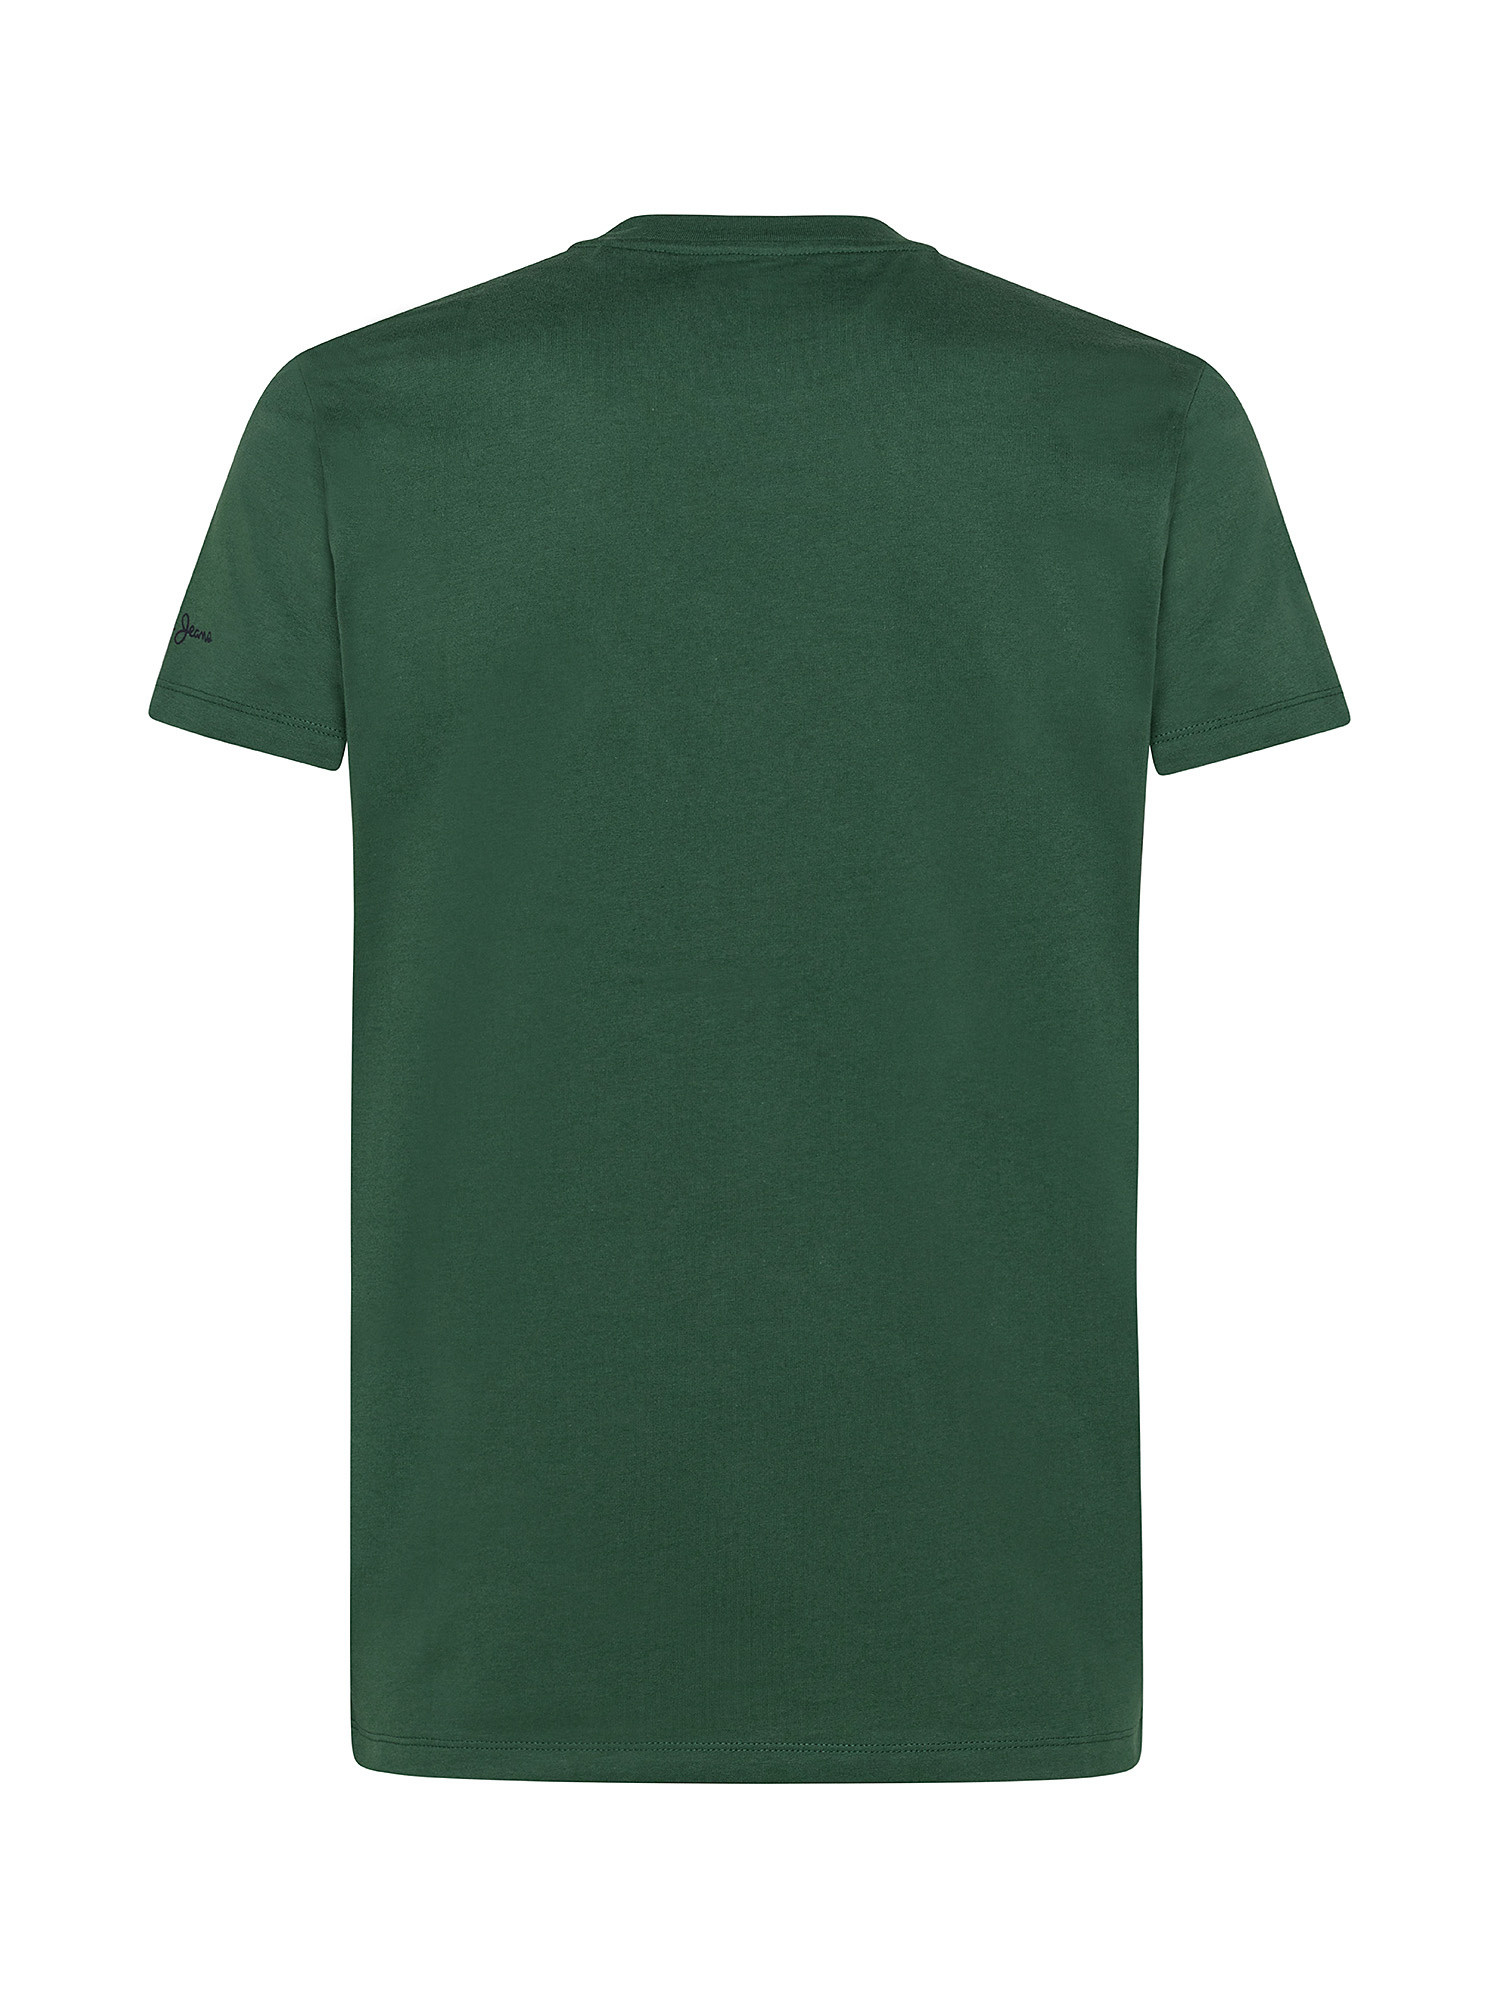 T-shirt in cotone Totem, Verde, large image number 1